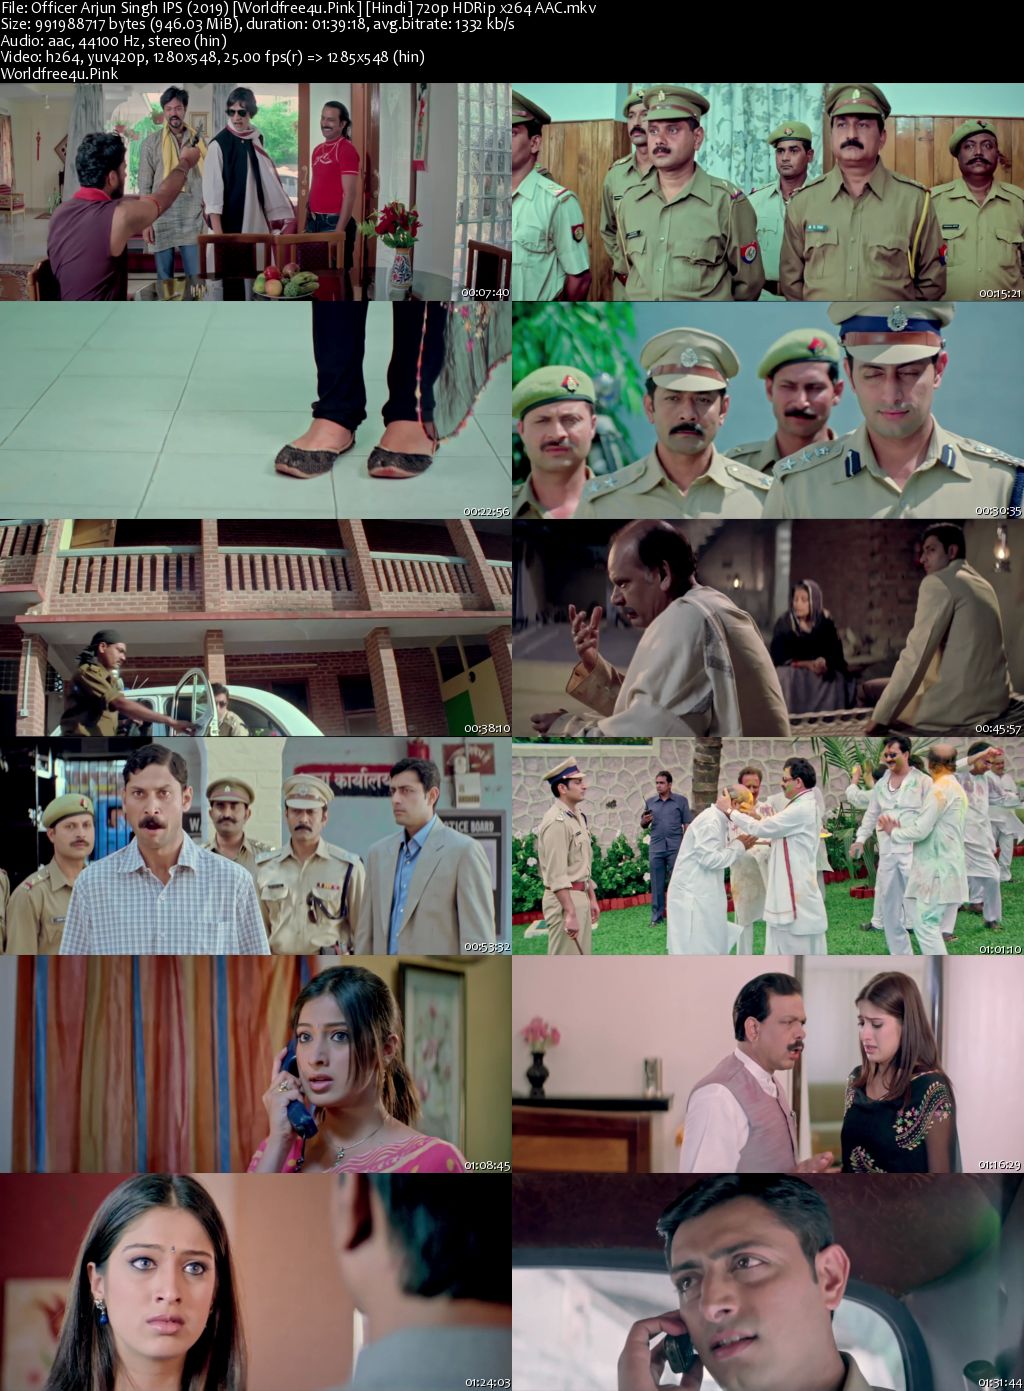 Officer Arjun Singh IPS 2019 Hindi Movie Download || HDRip 720p